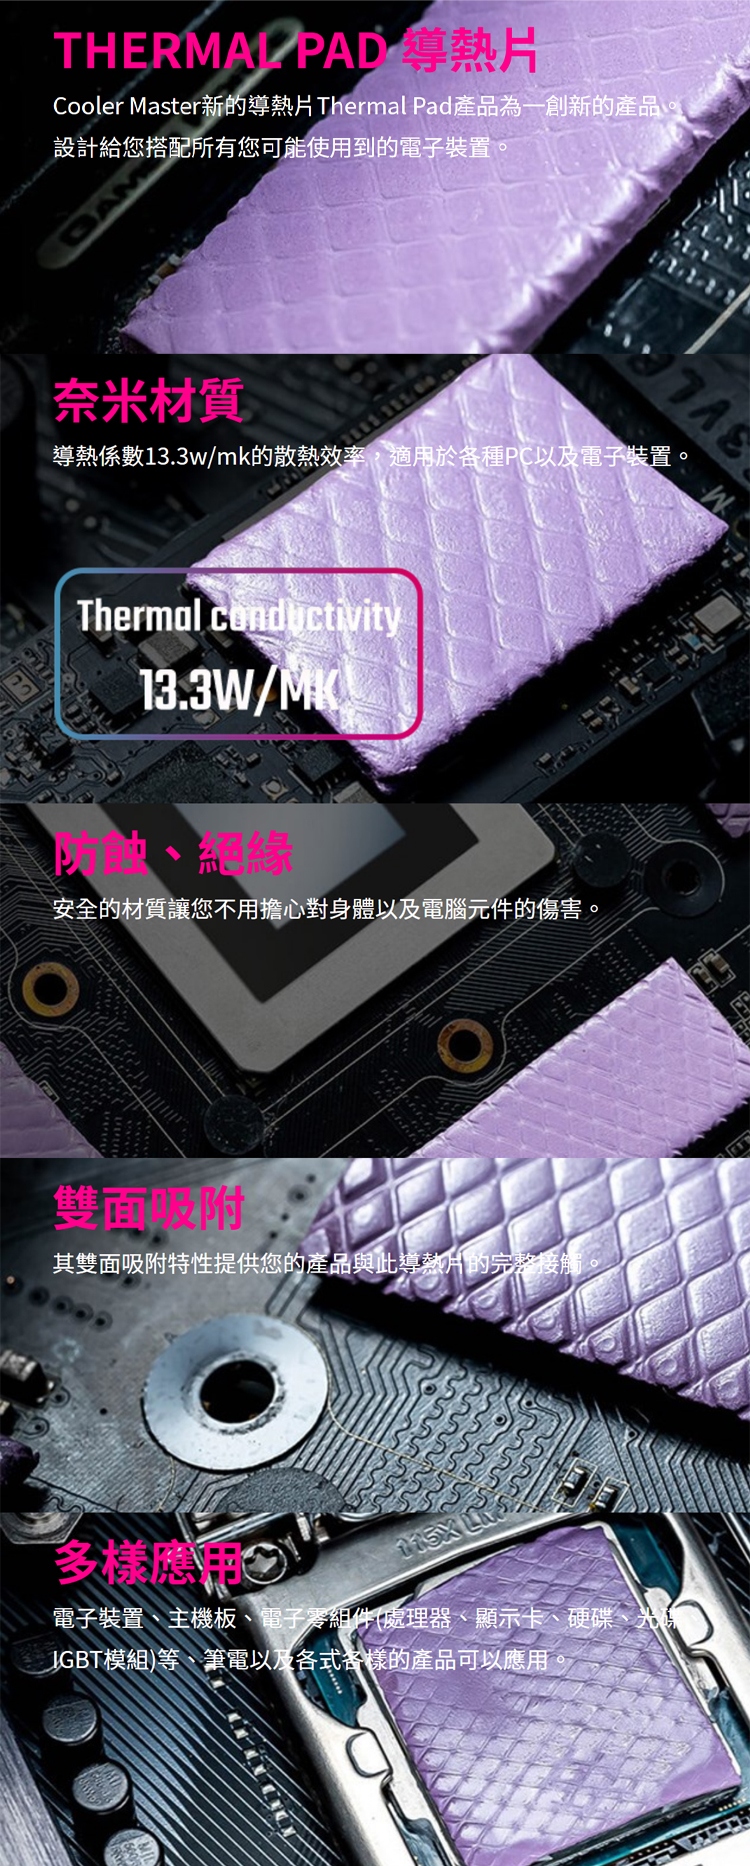 Thermal-Pad-1.5mm-內.jpg